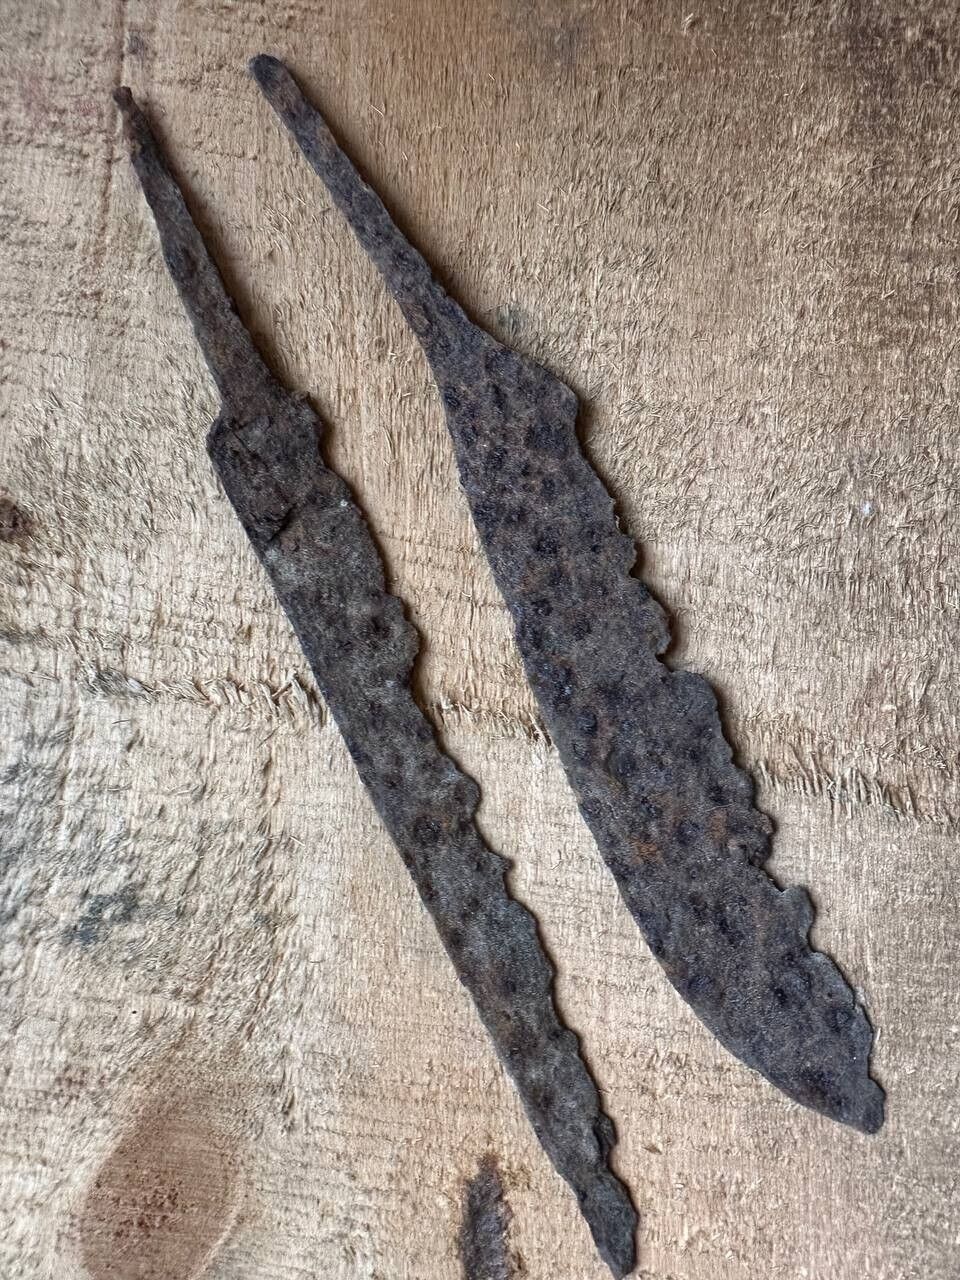 Ancient Iron Knife, Ancient Artifact, Raw (2 knives)